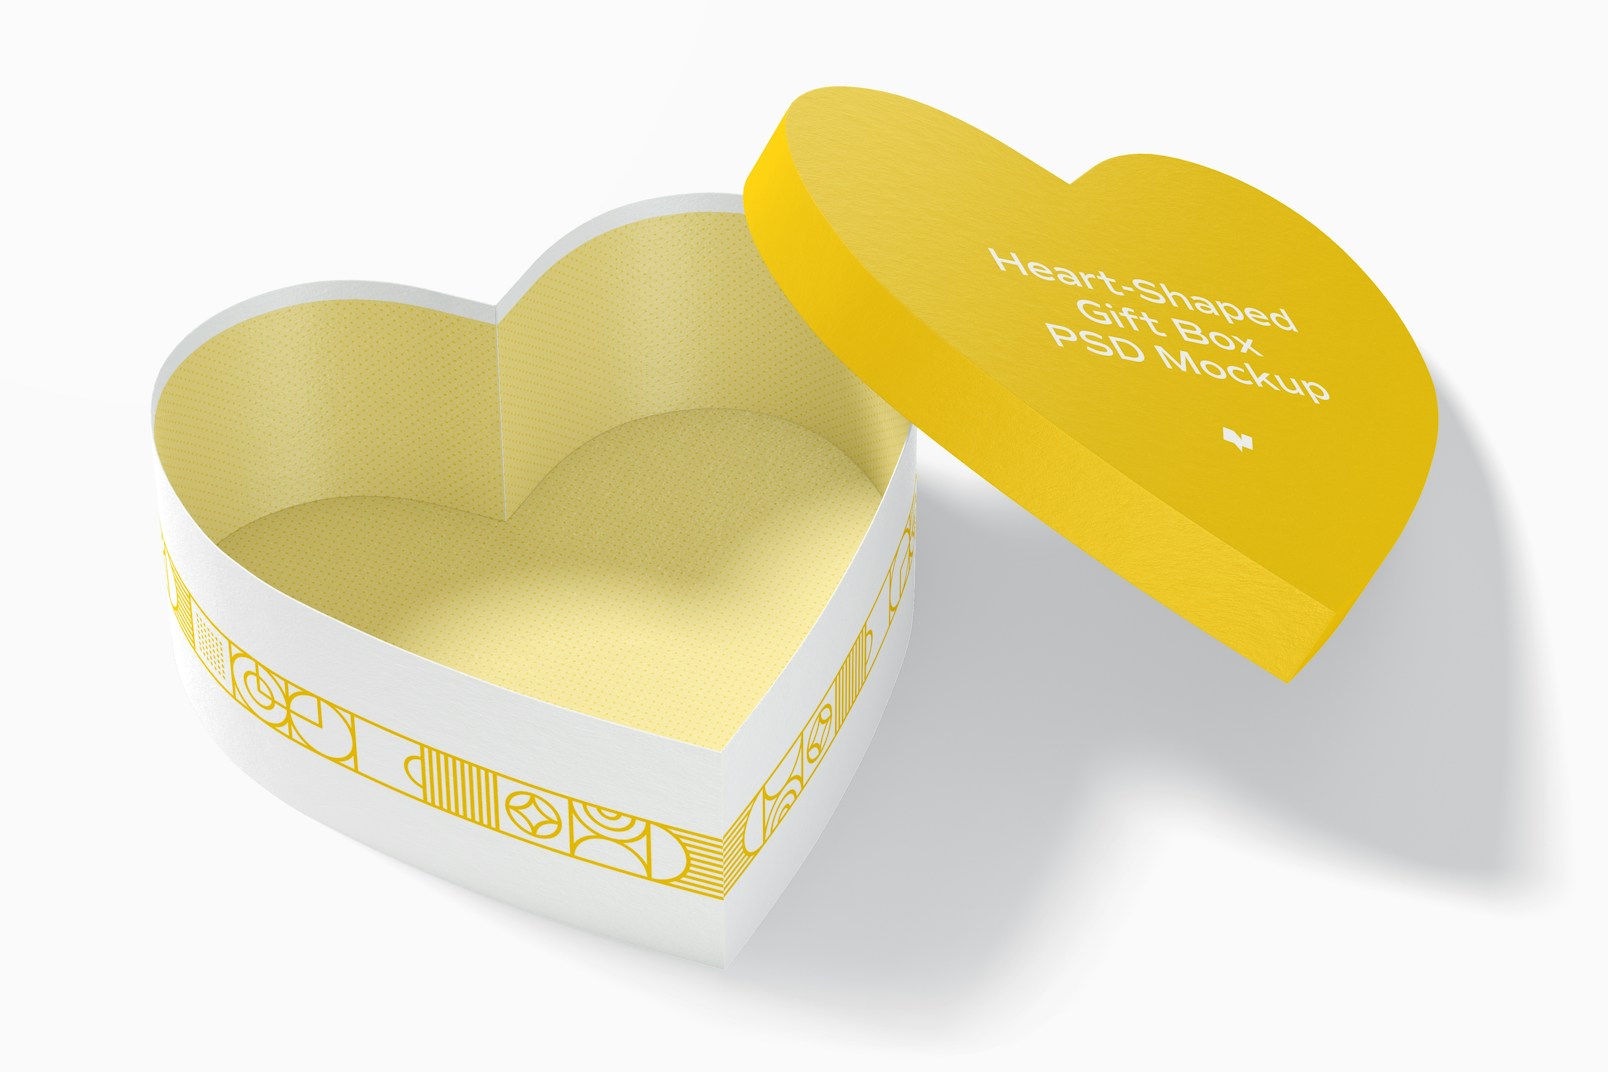 Heart-Shaped Gift Box Mockup, Opened